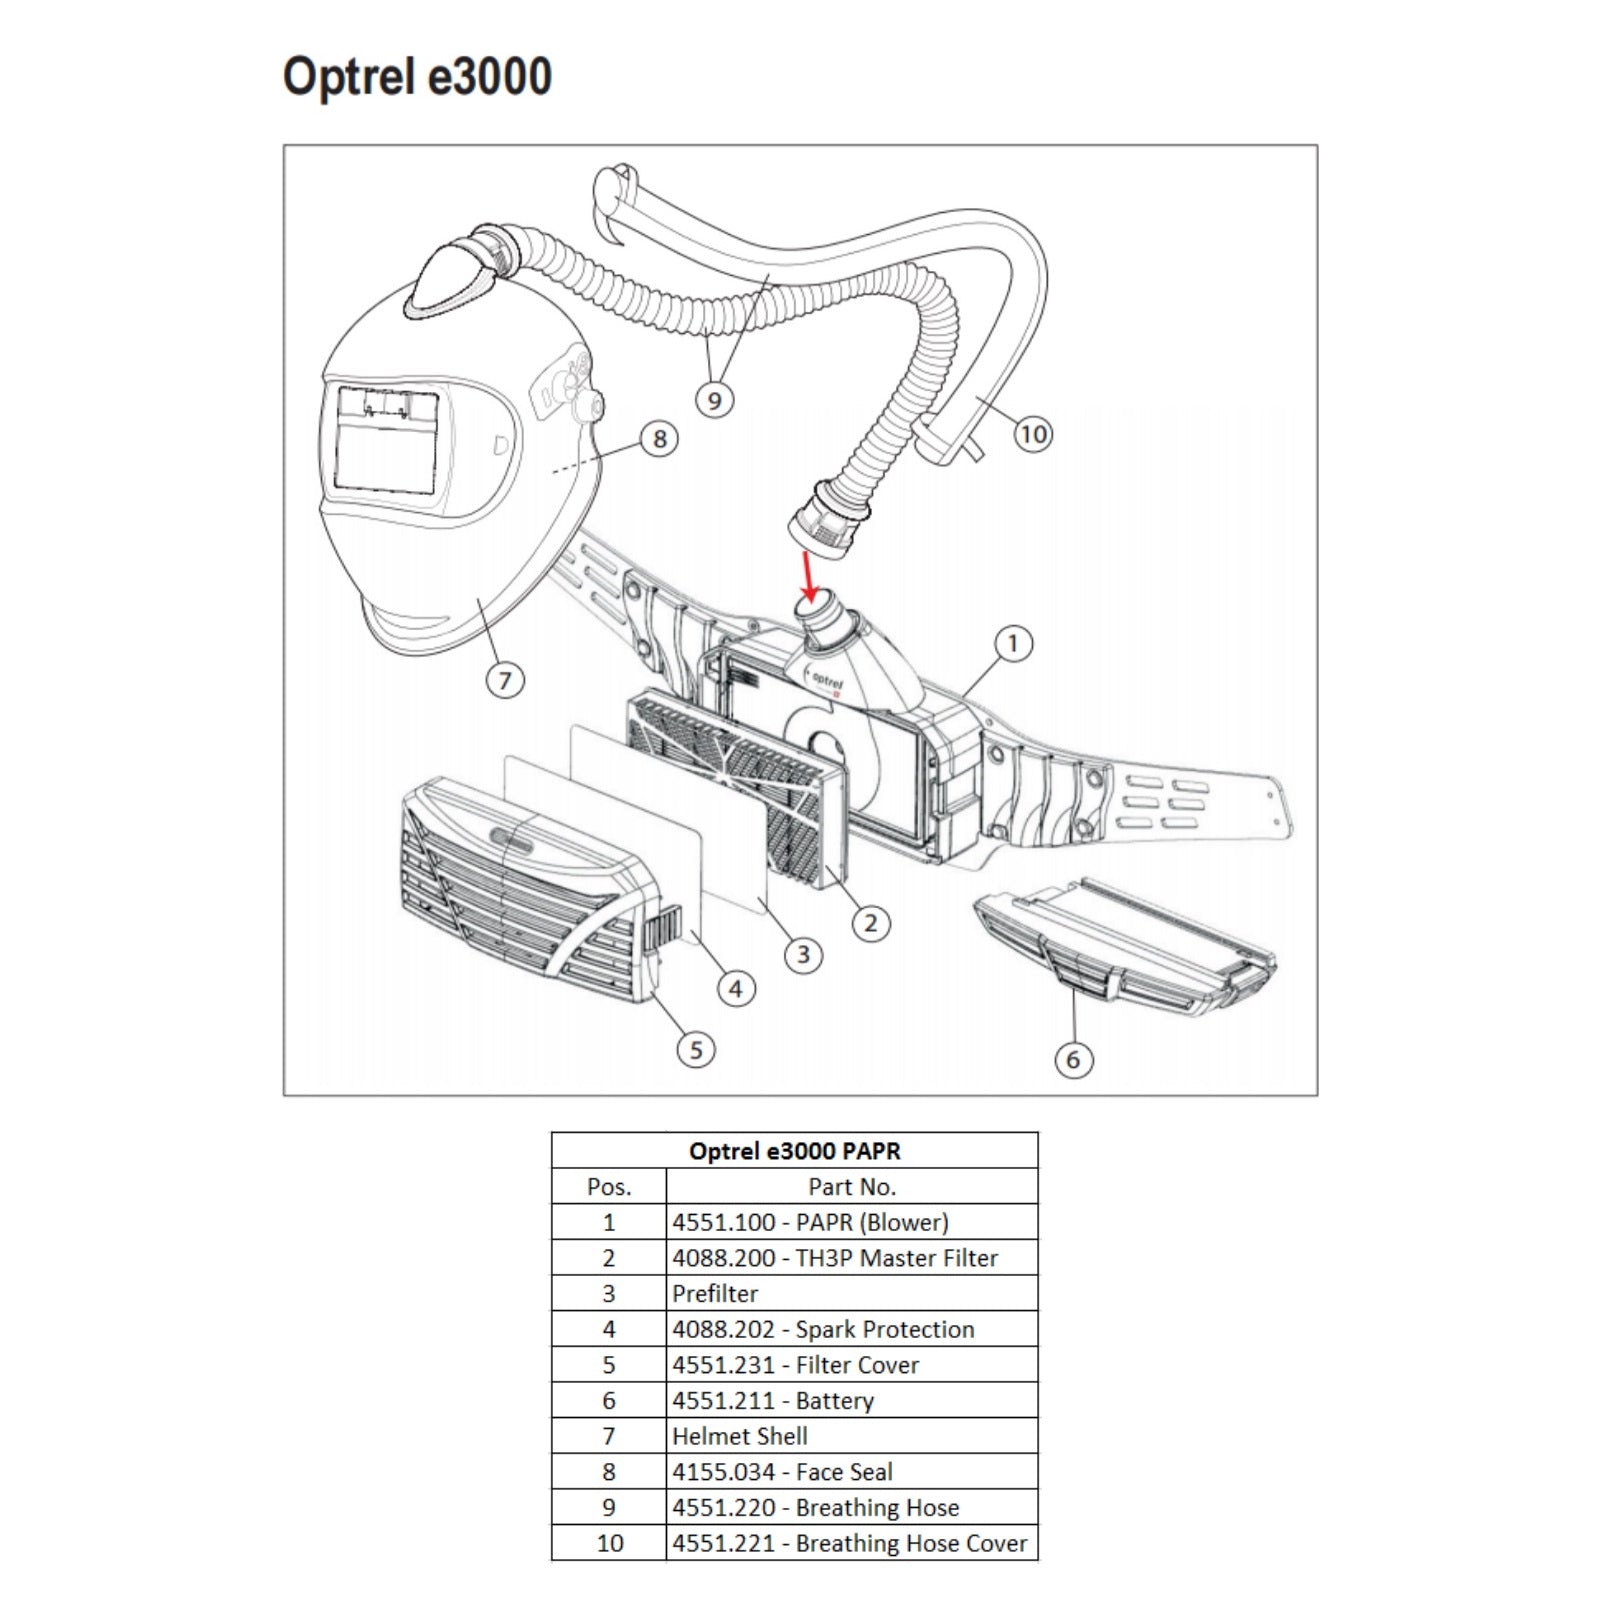 Optrel Spark Protector for e3000 PAPR (4088.202)